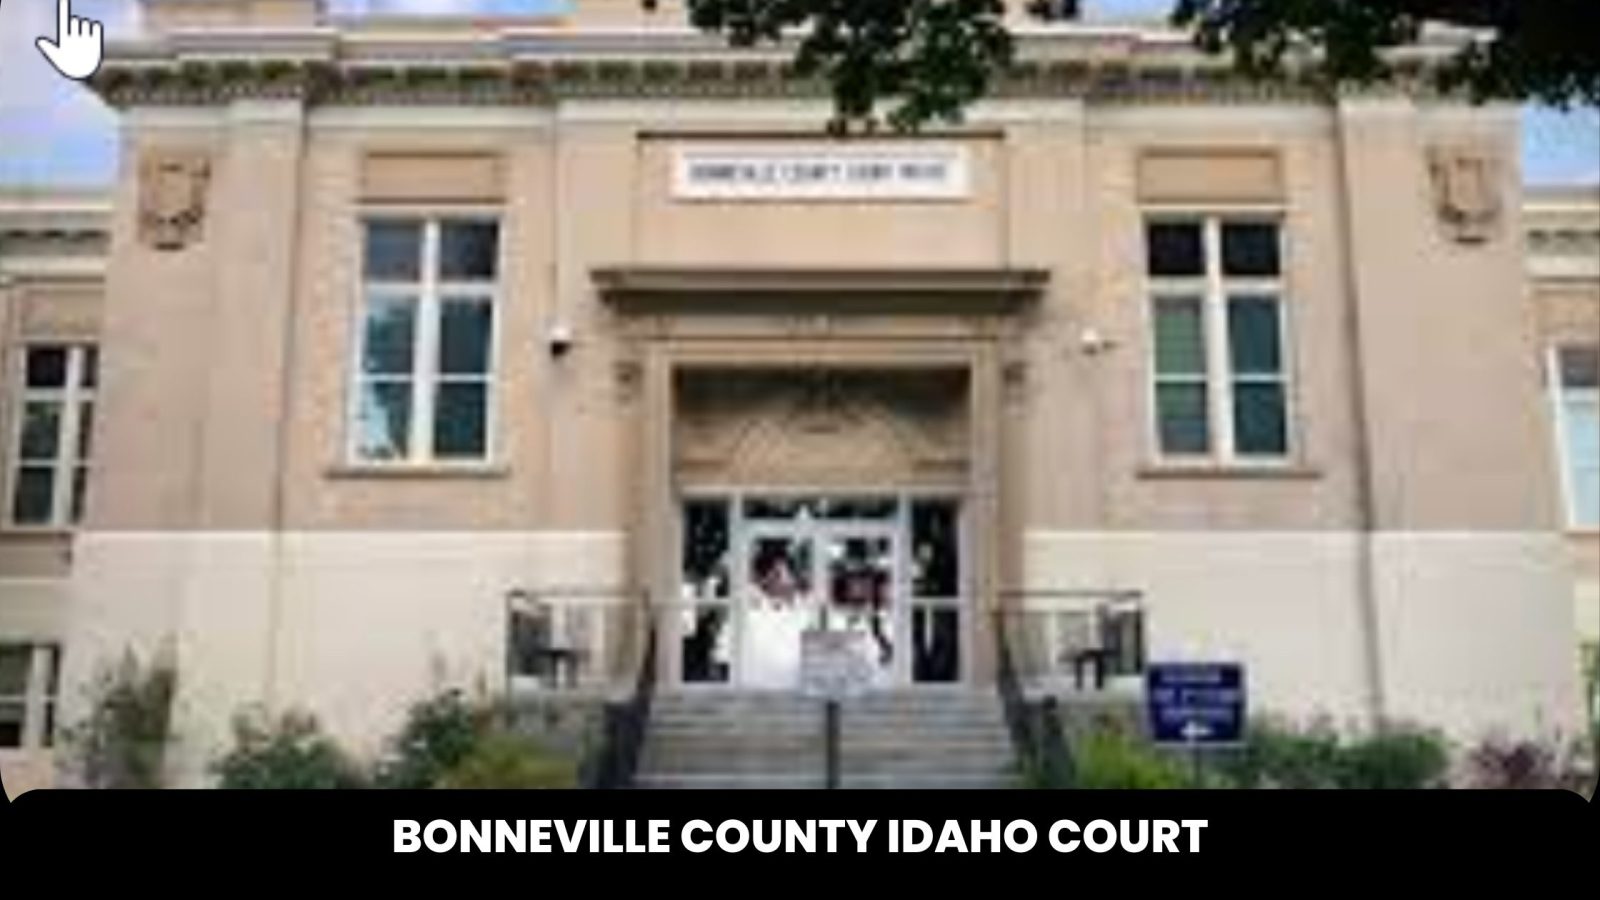 Bonneville County Idaho Court